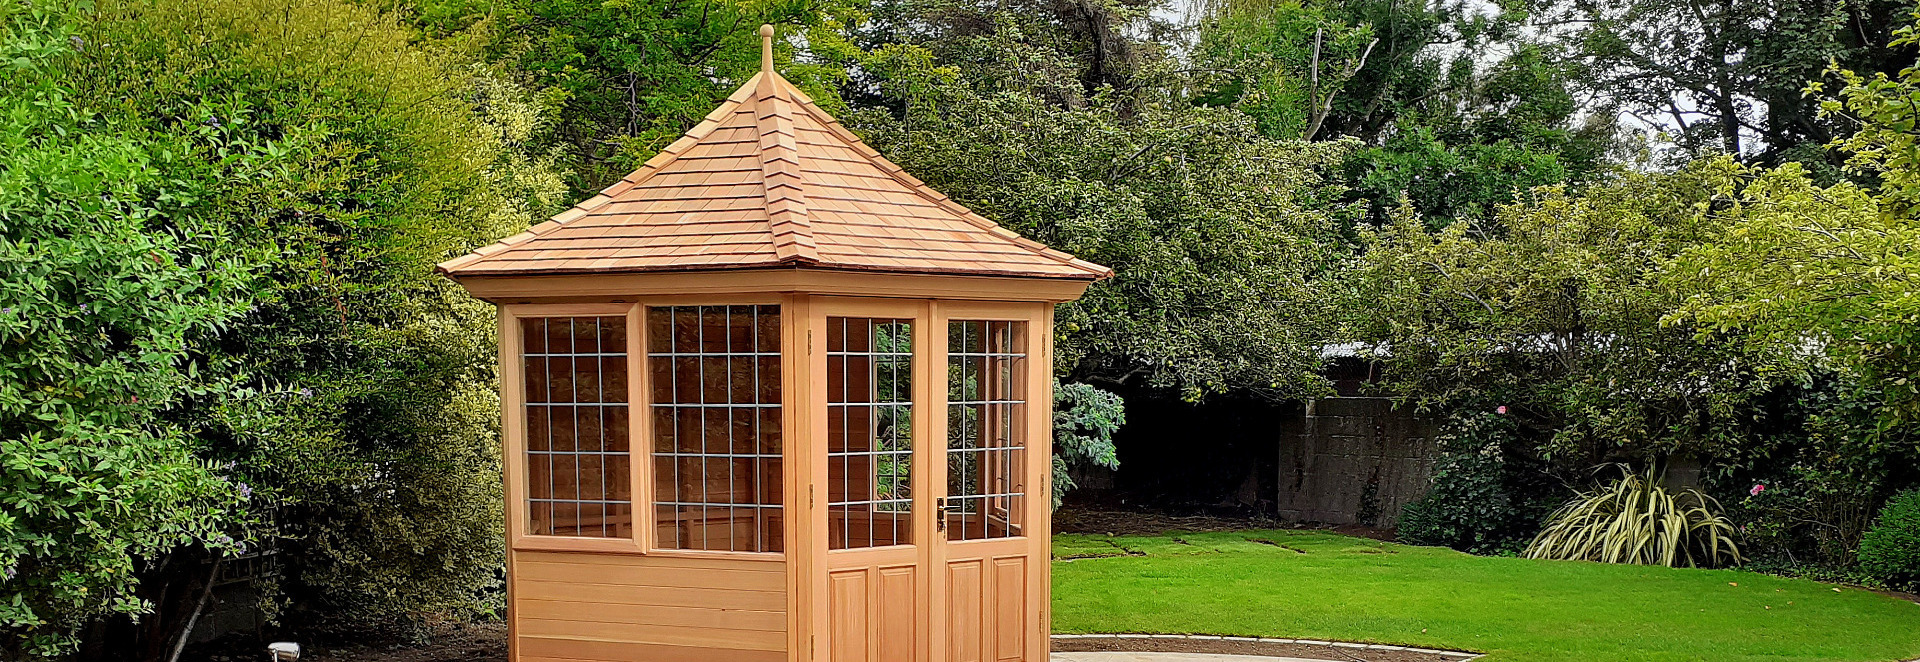 Stunning Garden Summerhouse in Donnybrook garden. New offers now available. Tel 087-2306 128